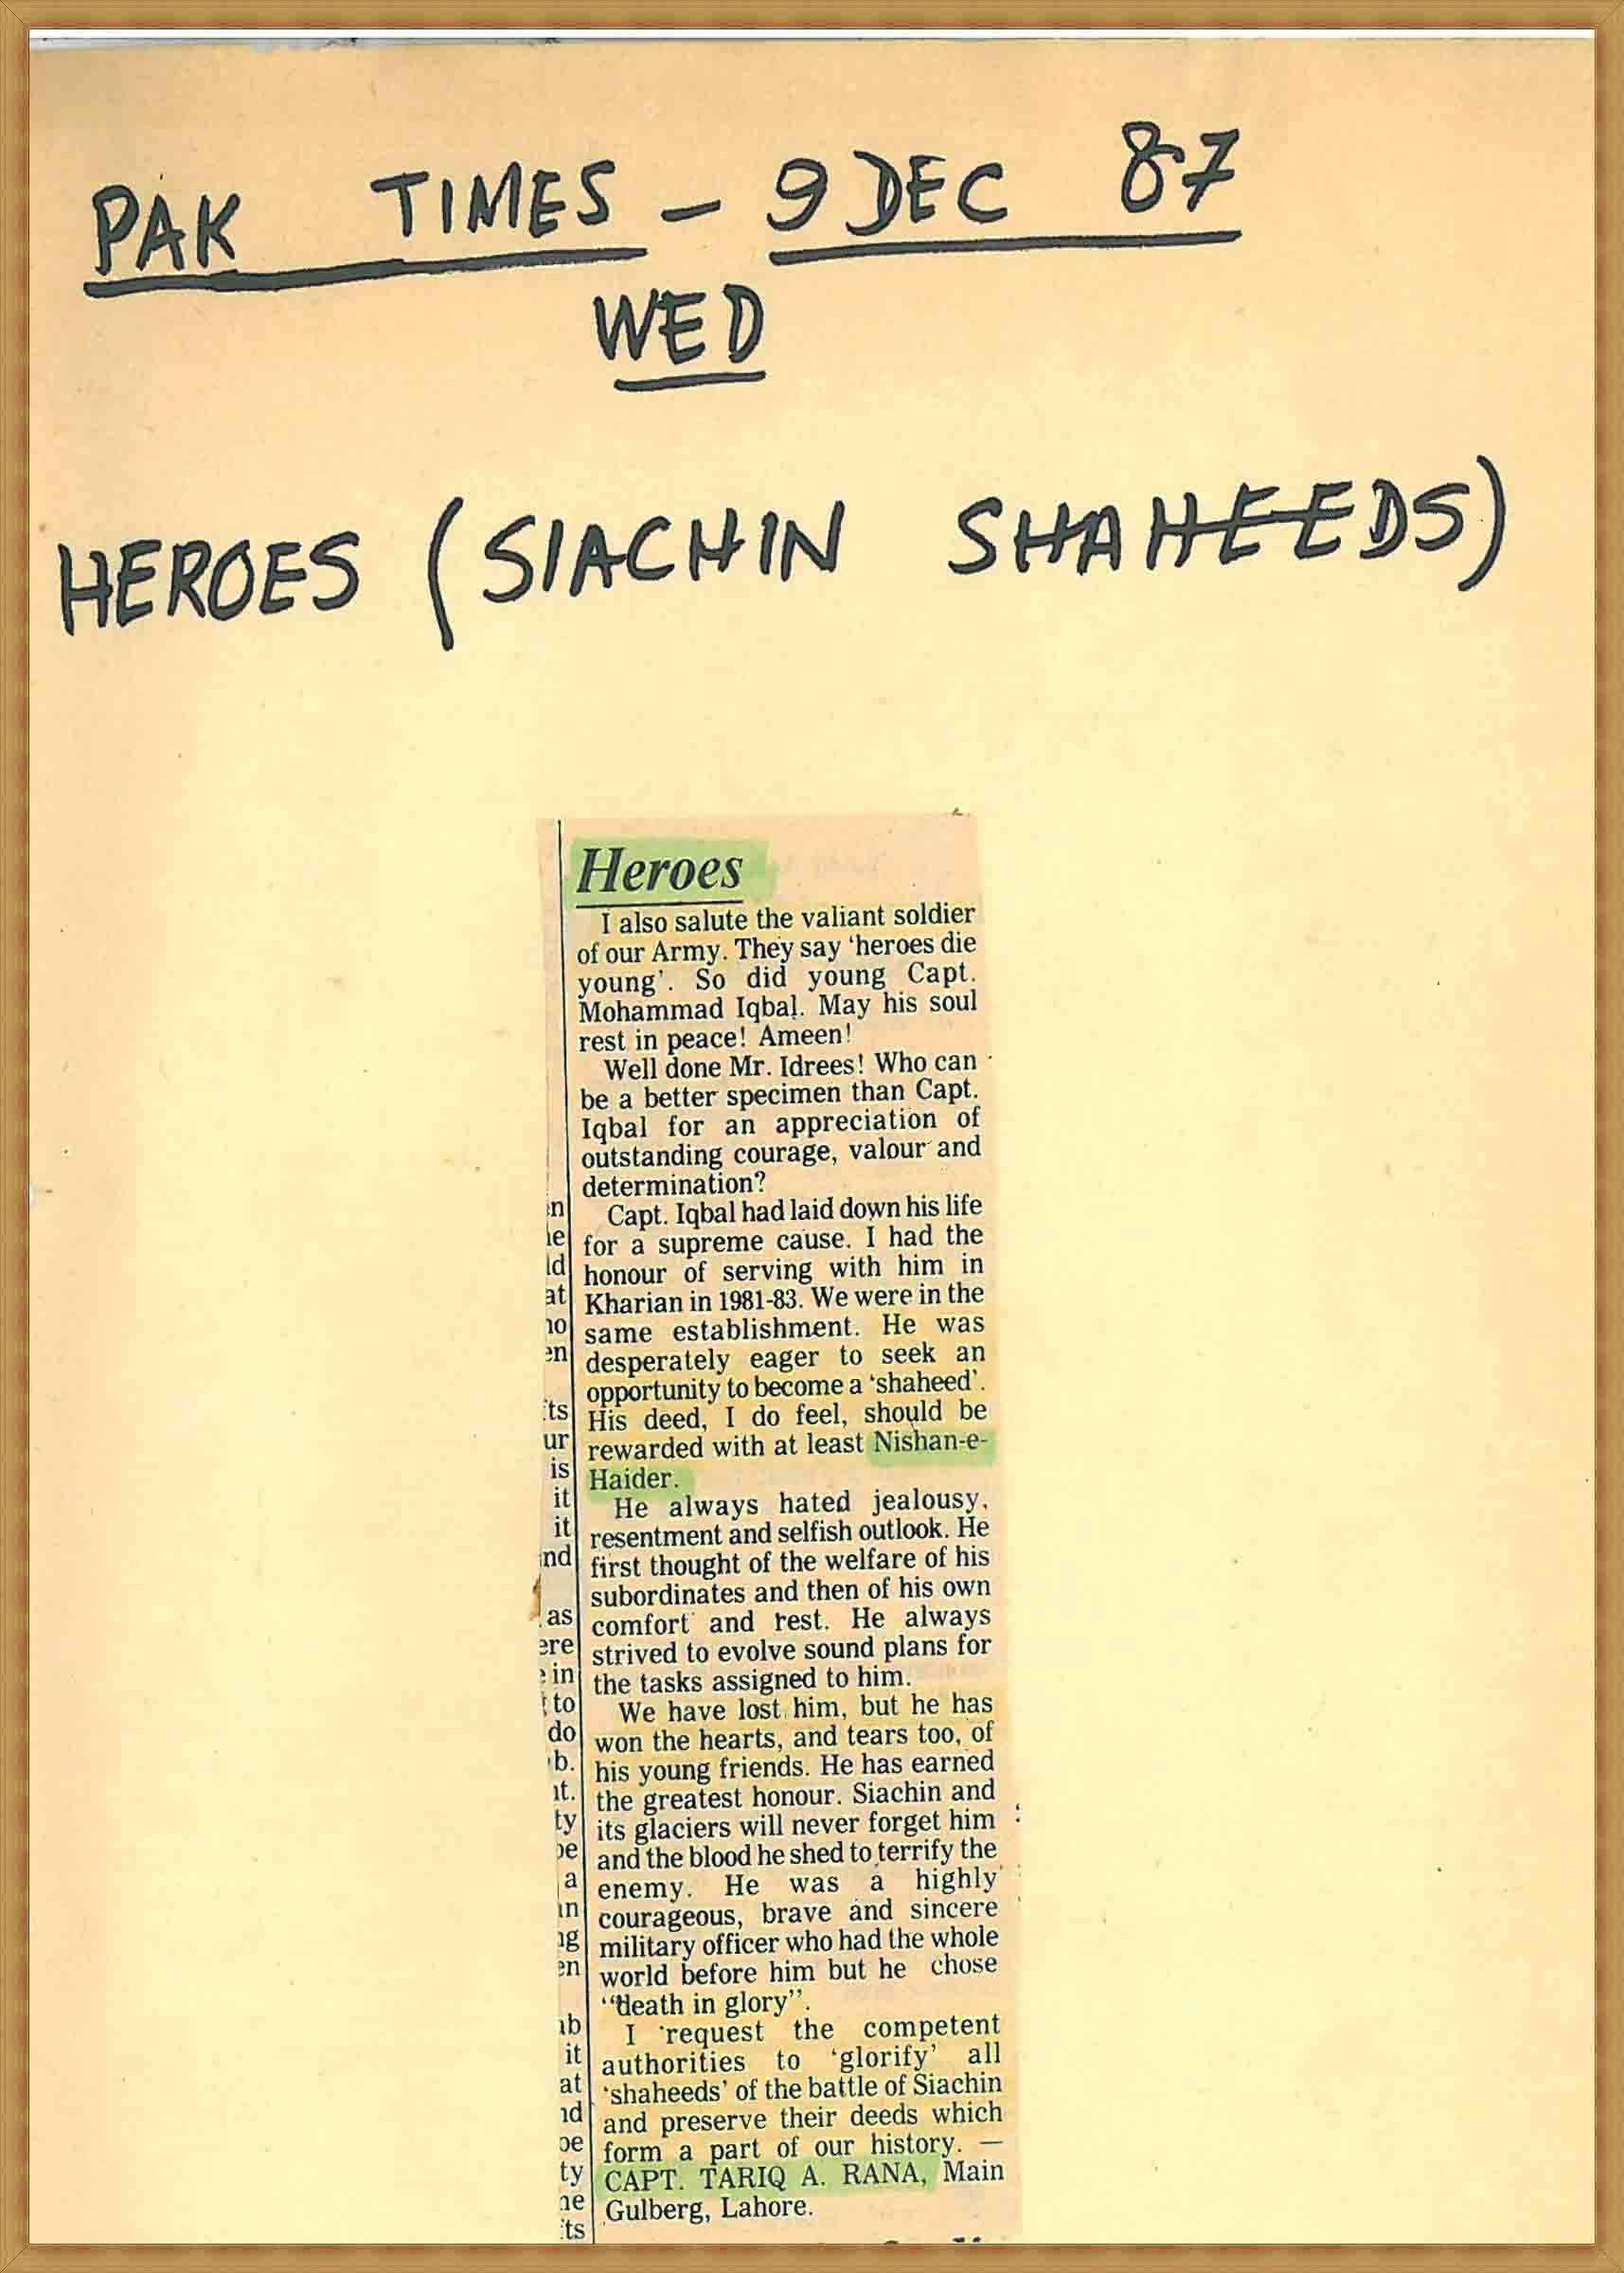 Heroes-Siachin Shaheeds(09-12-1987)